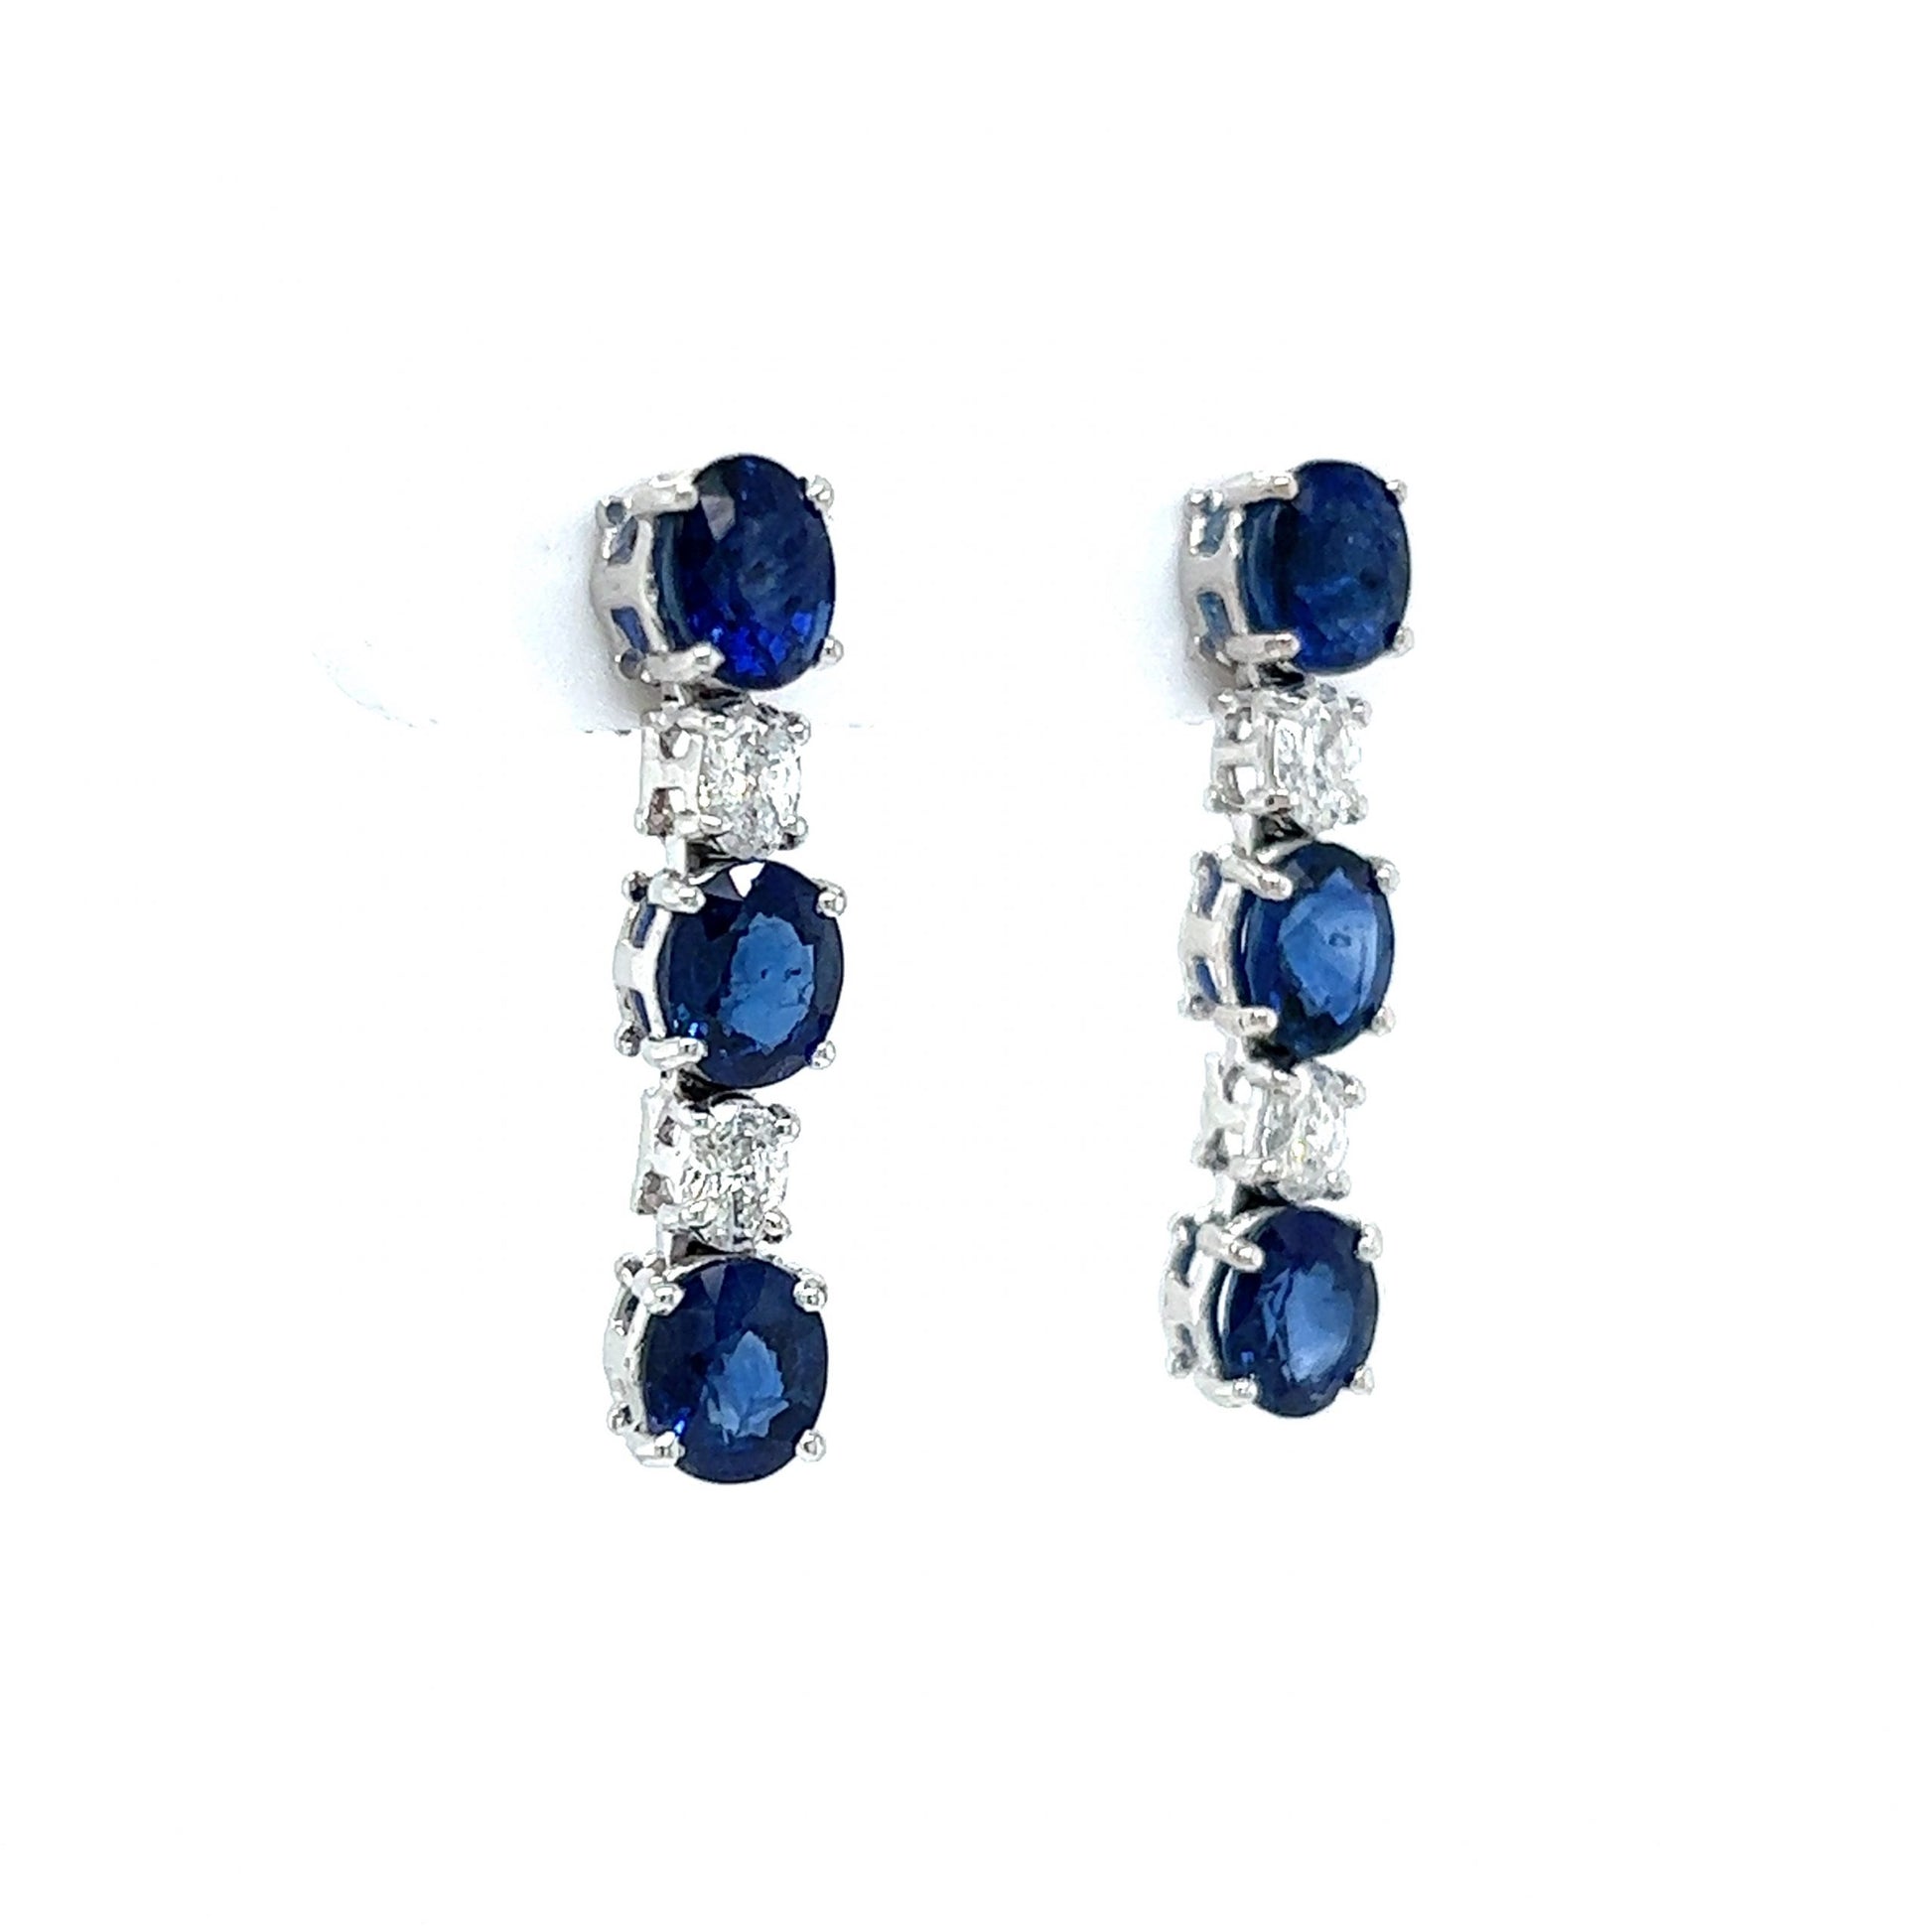 Elegant Oval Cut Sapphire & Diamond Earrings in 18k White Gold